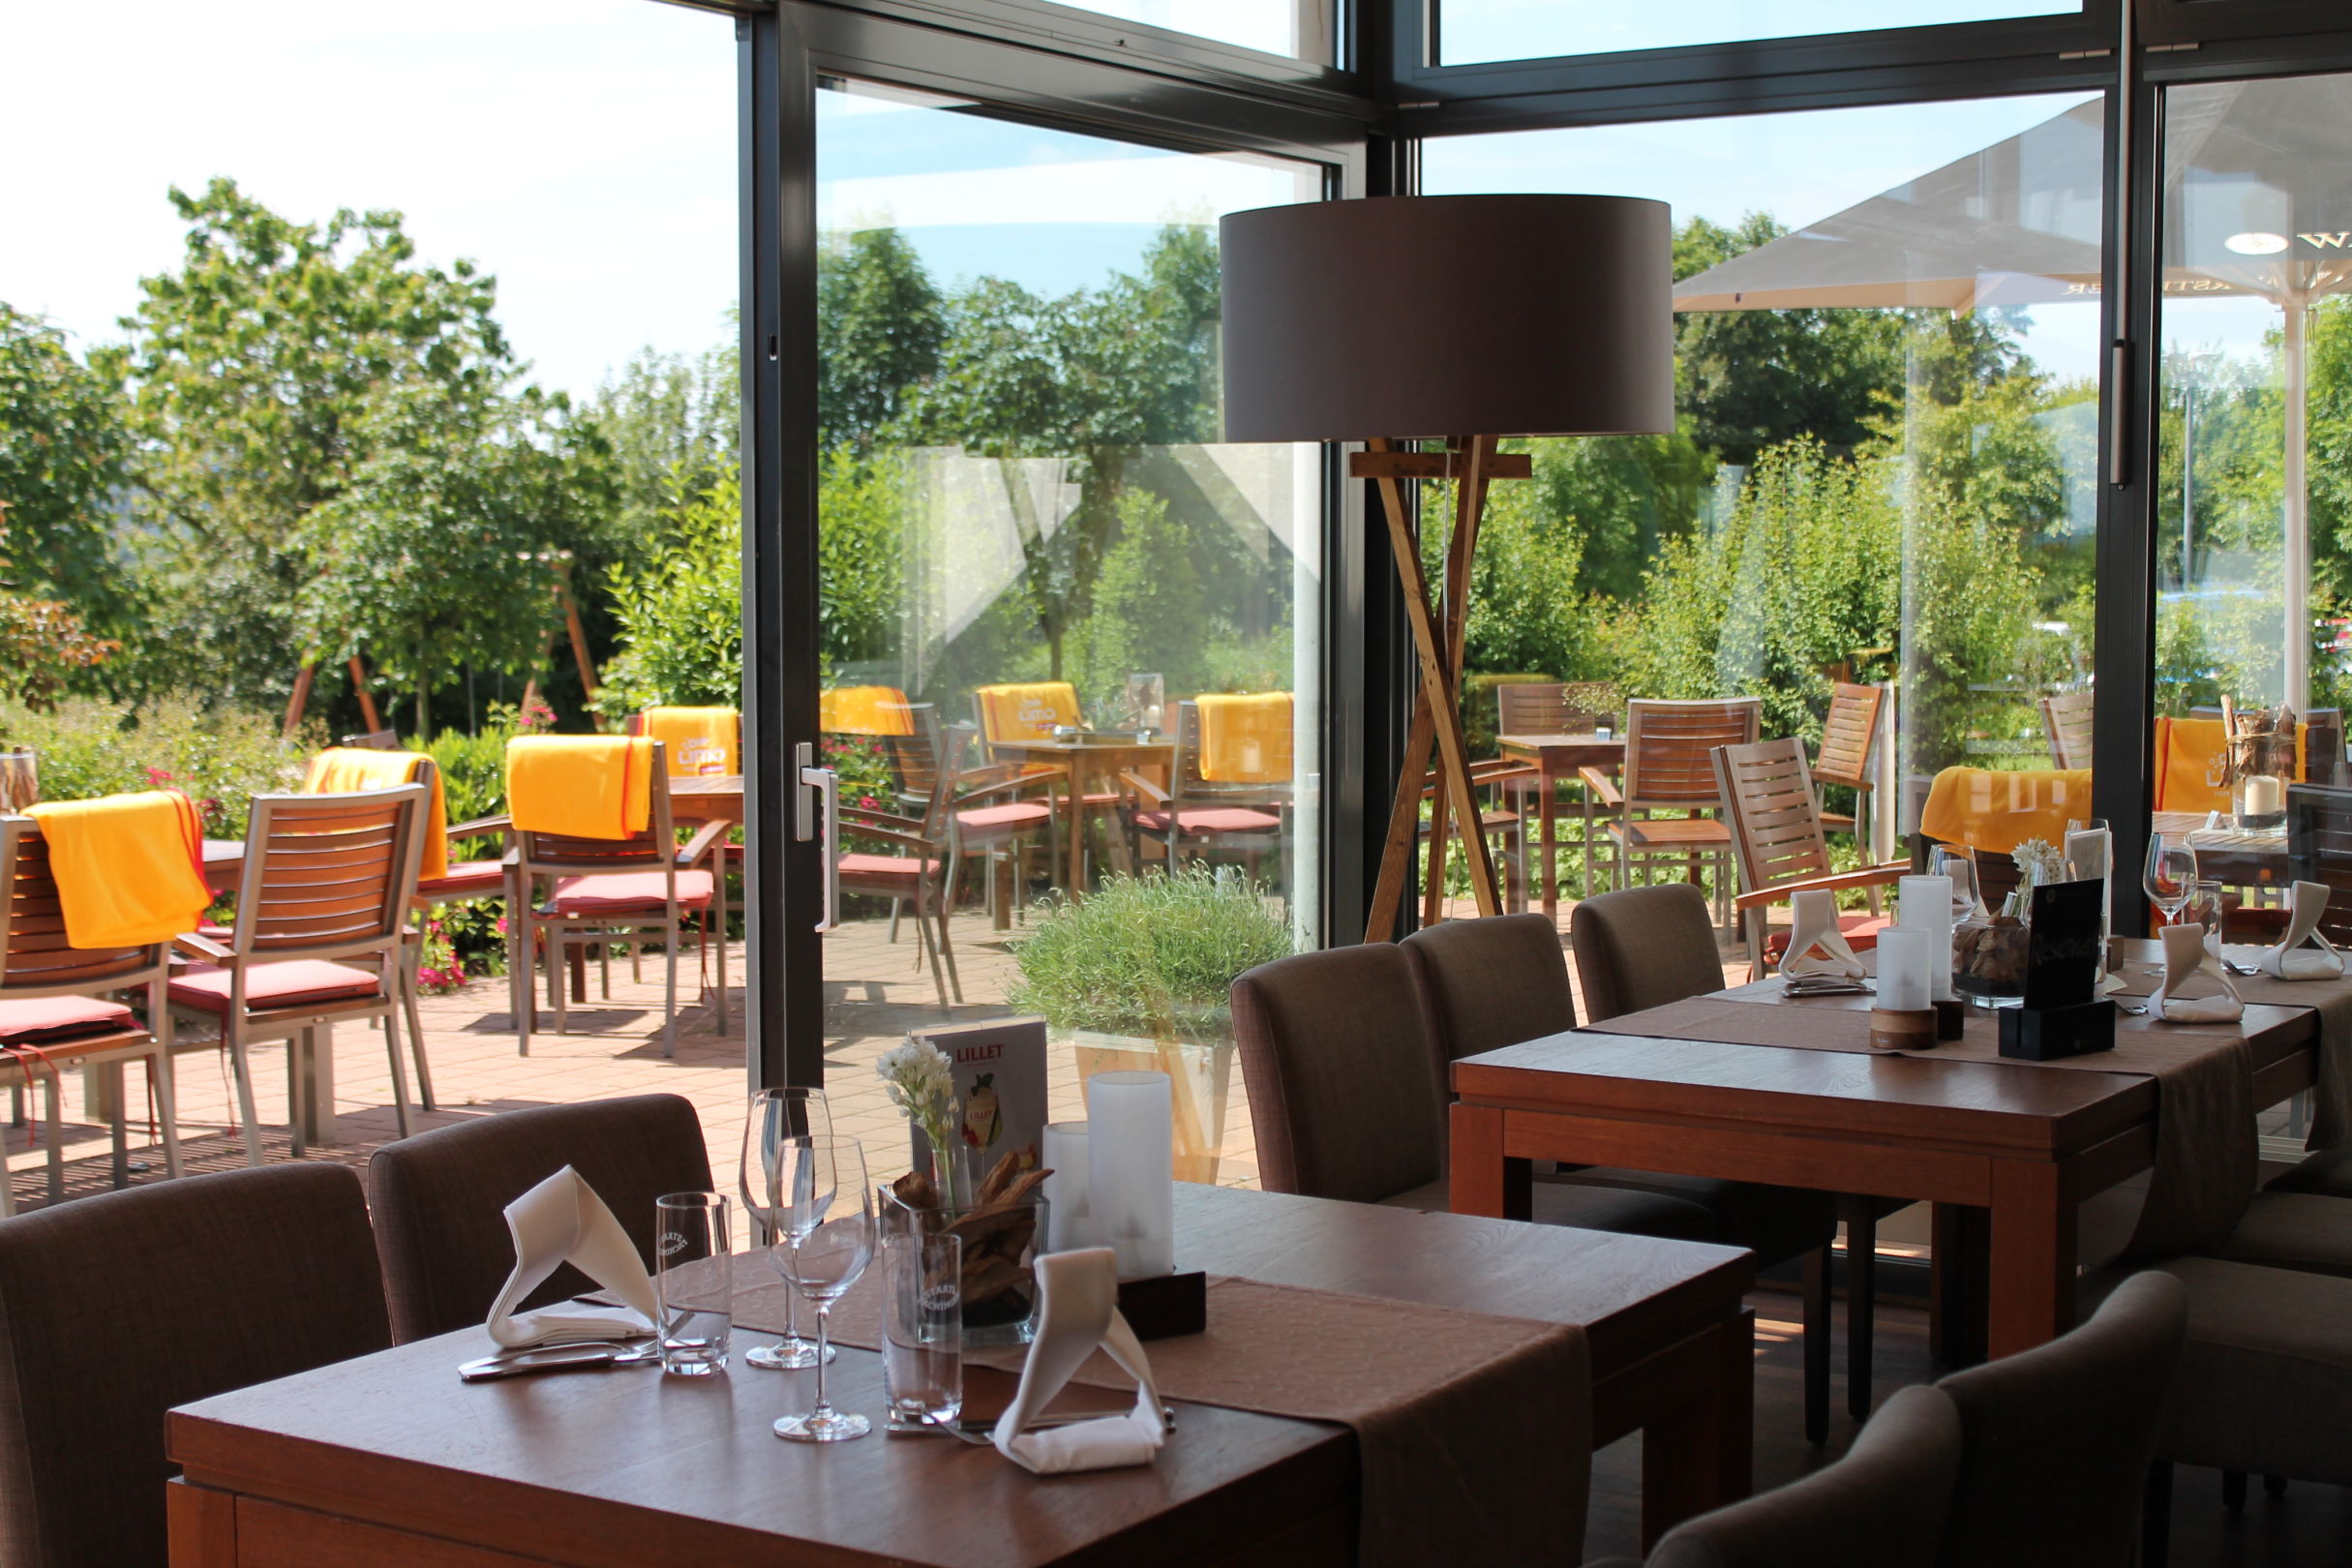 Airporthotel Paderborn Restaurant